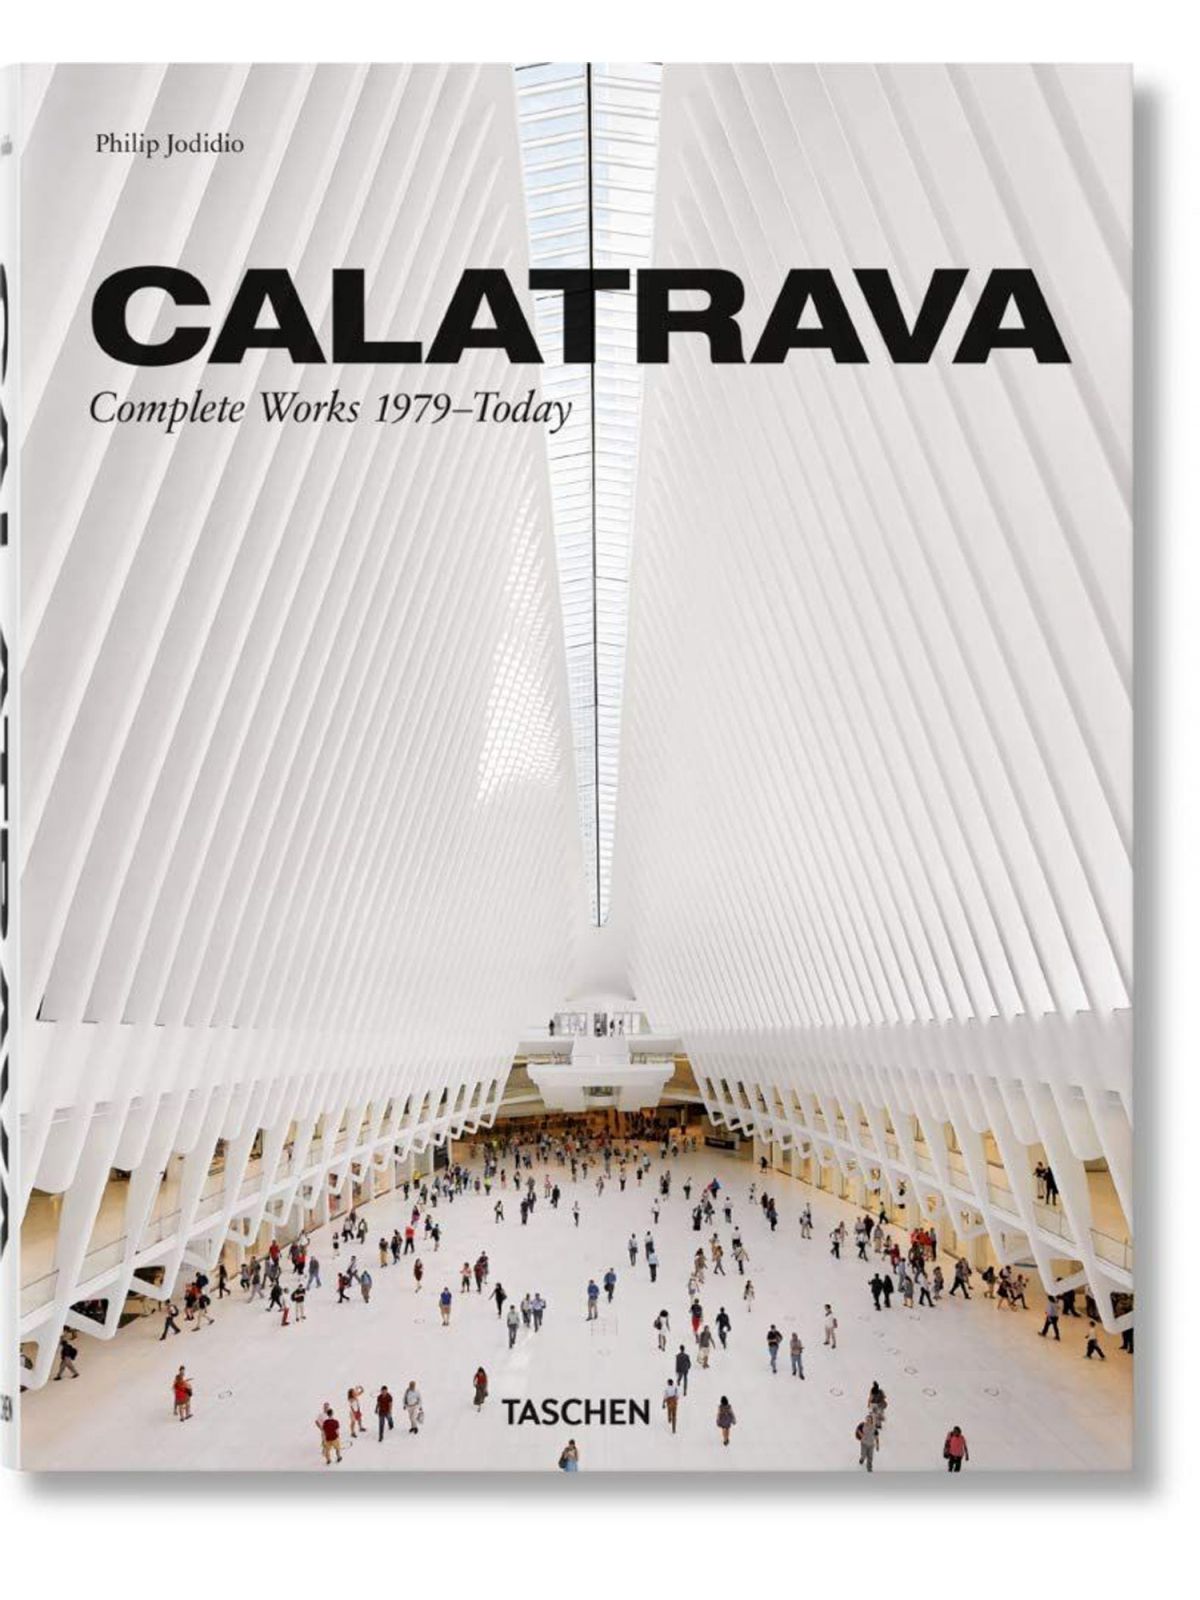 CALATRAVA COMPLETE WORKS 1979-TODAY  Купить Книгу на Английском